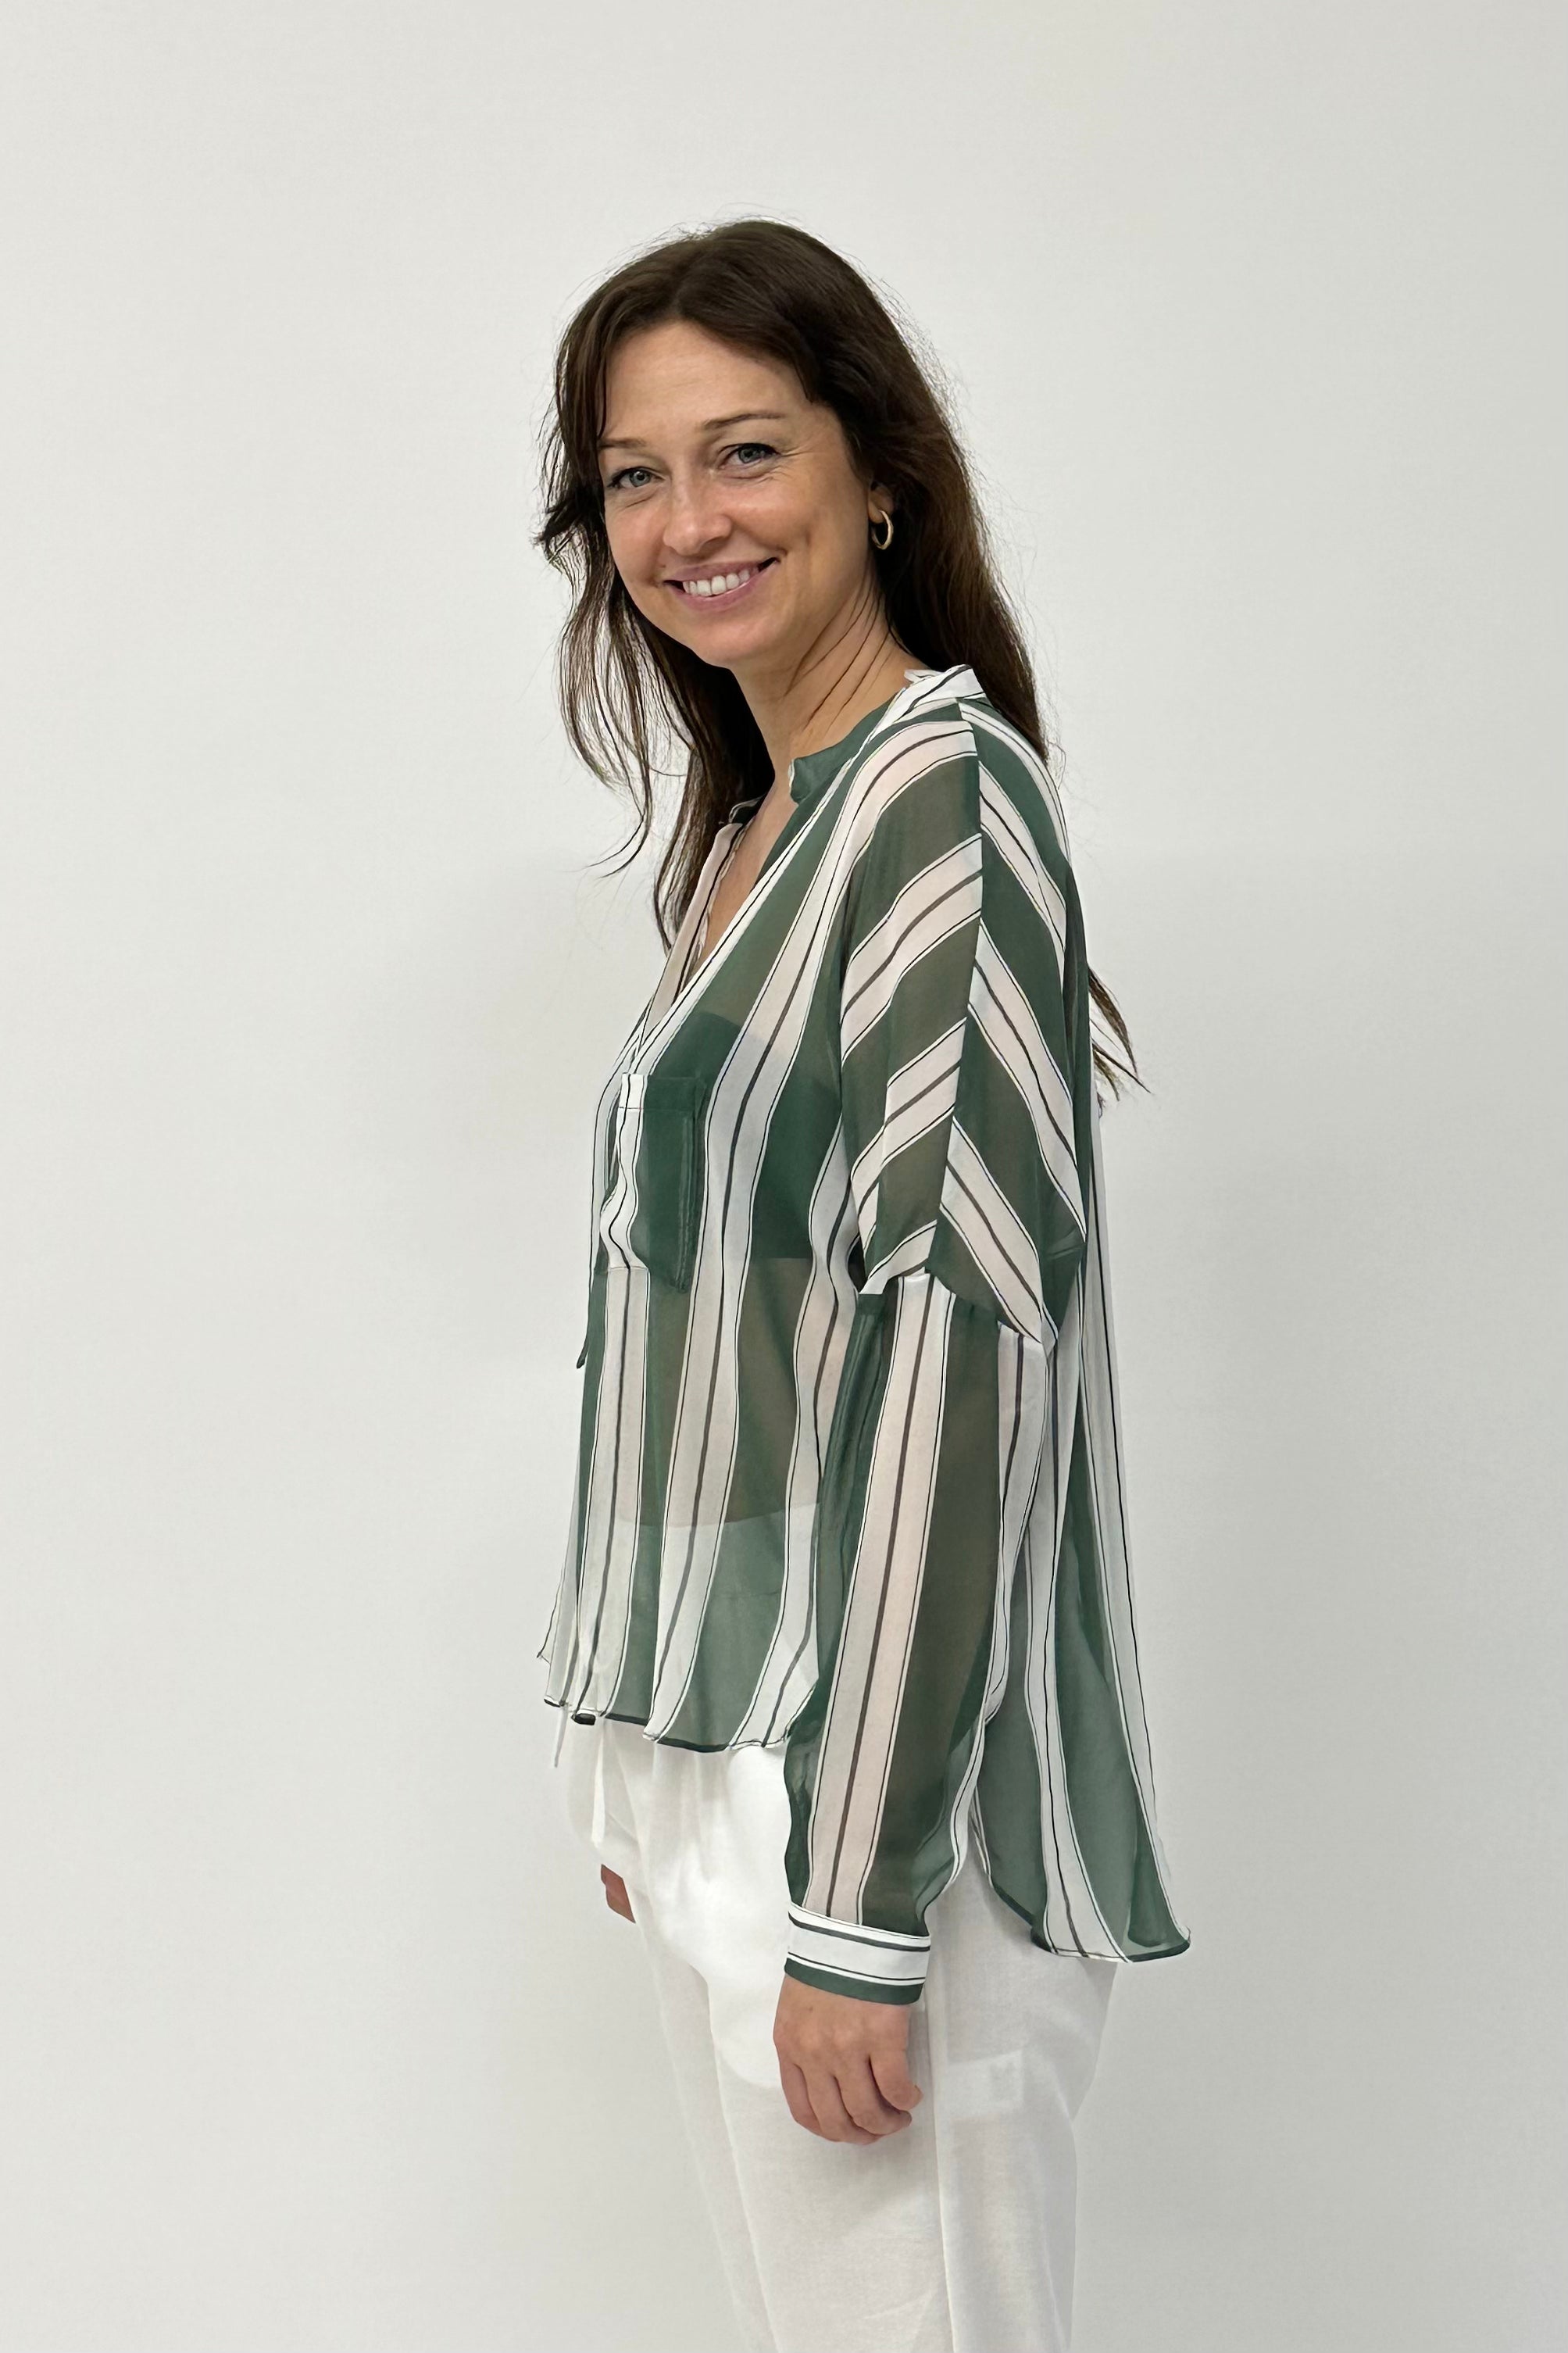 Rae’s Shirt Retro Stripe - GREEN AND WHITE Silk crepe